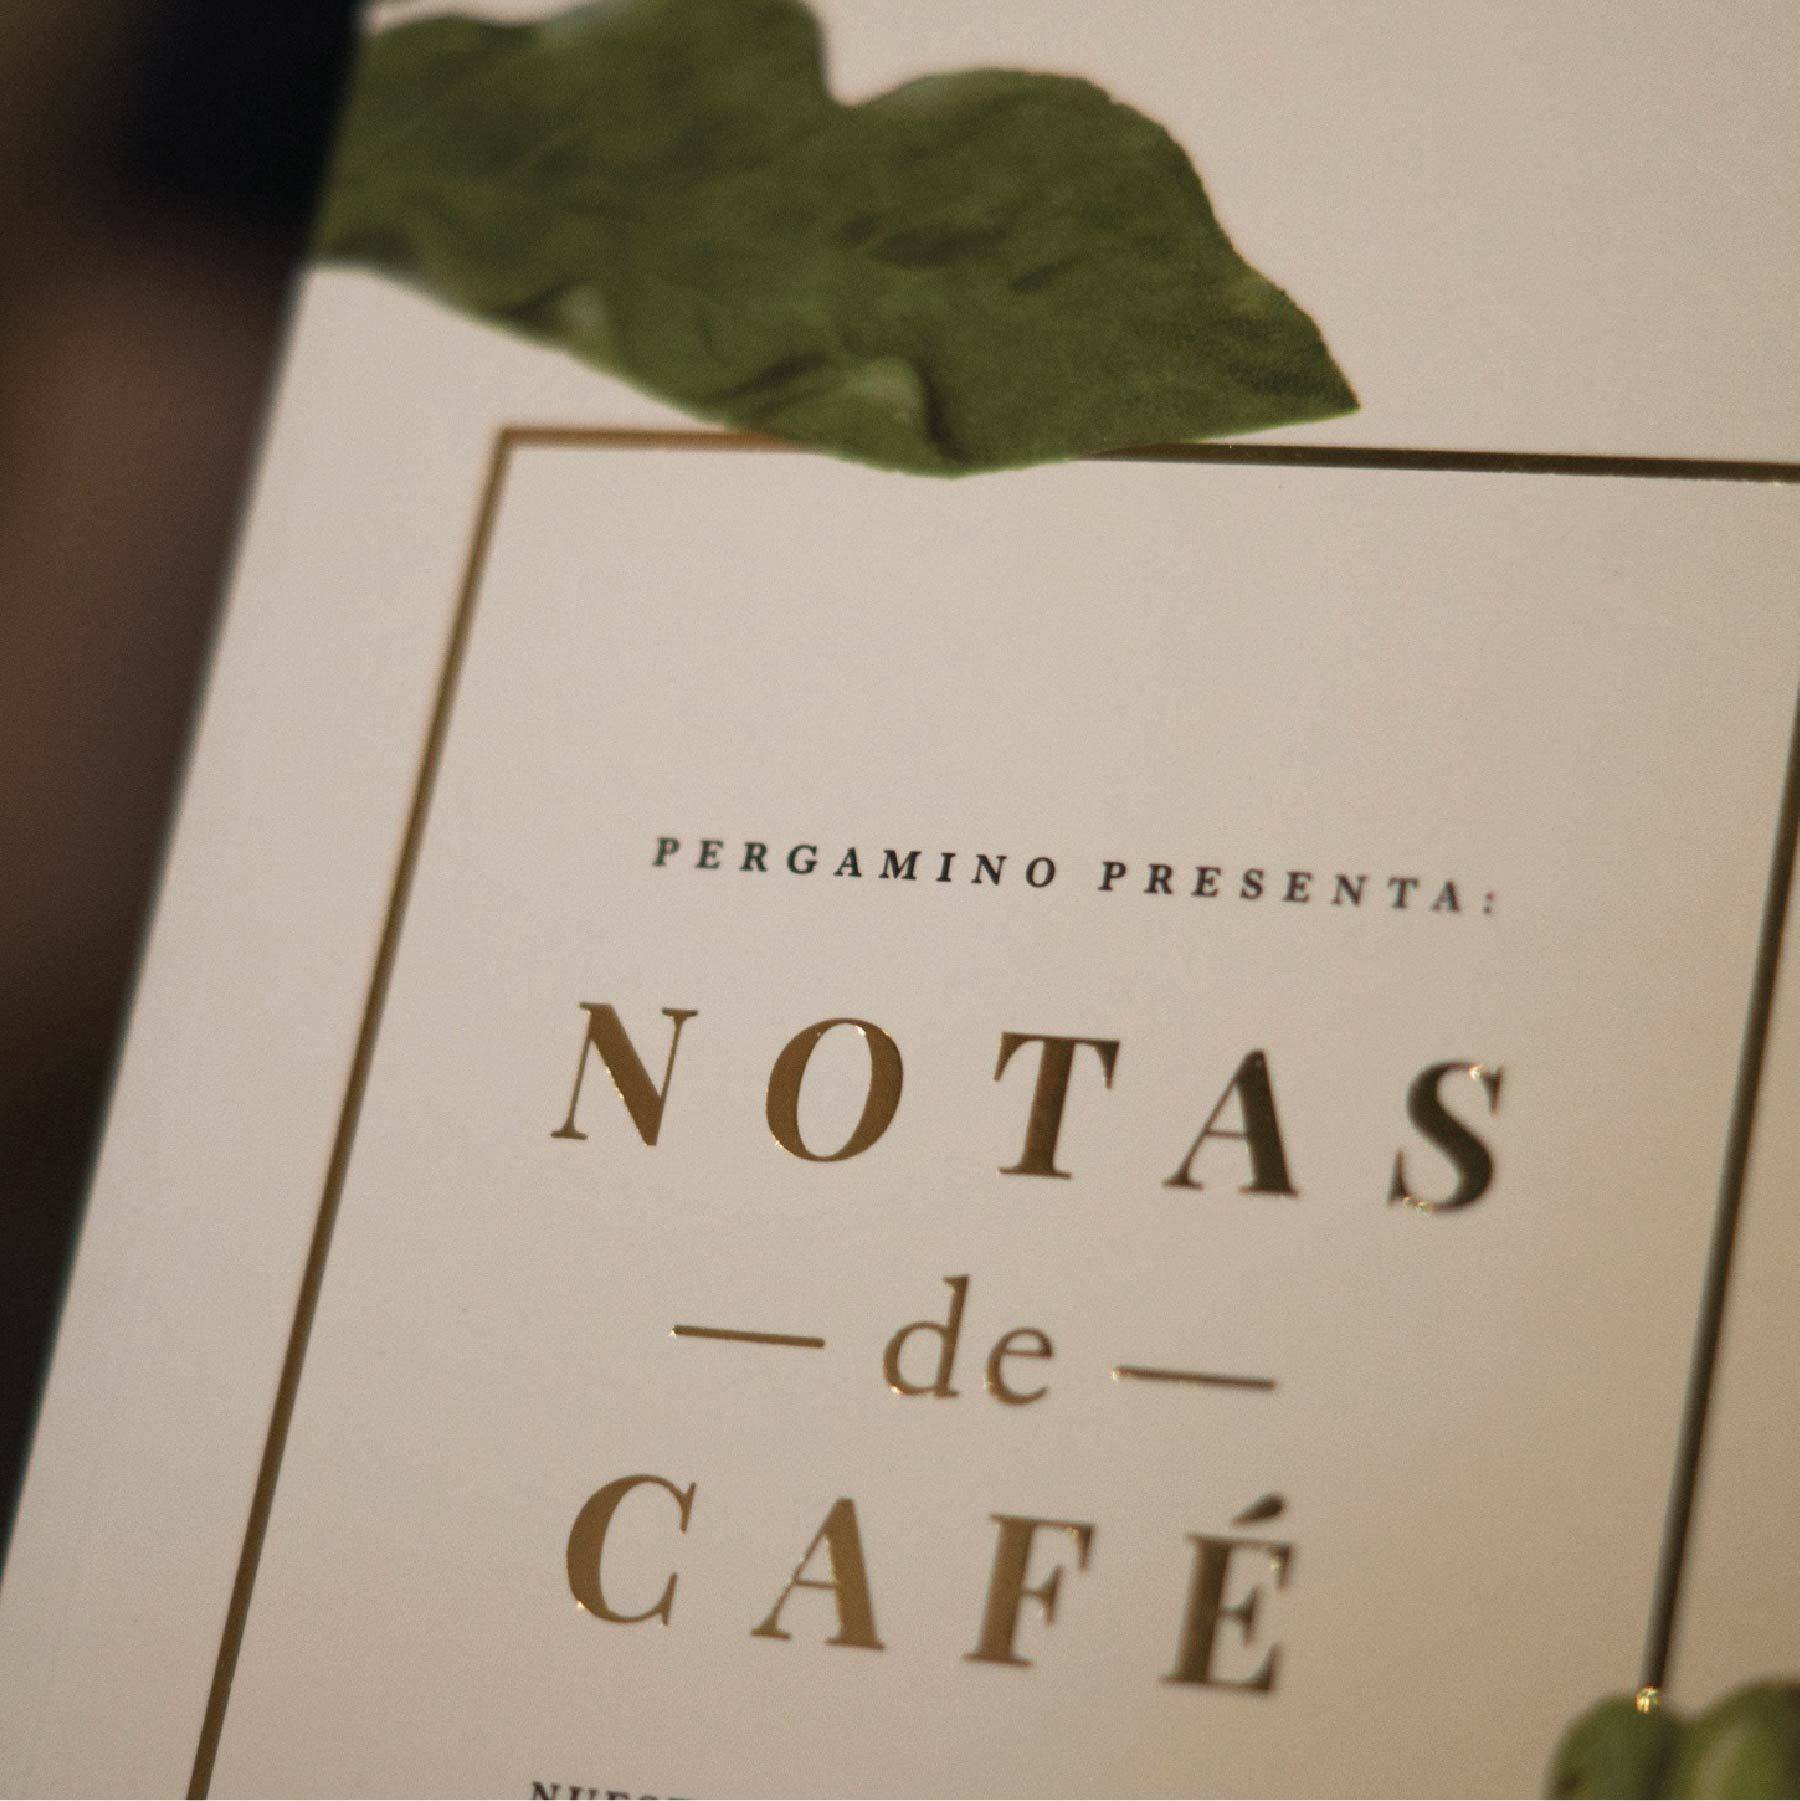 Librillo Notas de Café - PERGAMINO Colombia